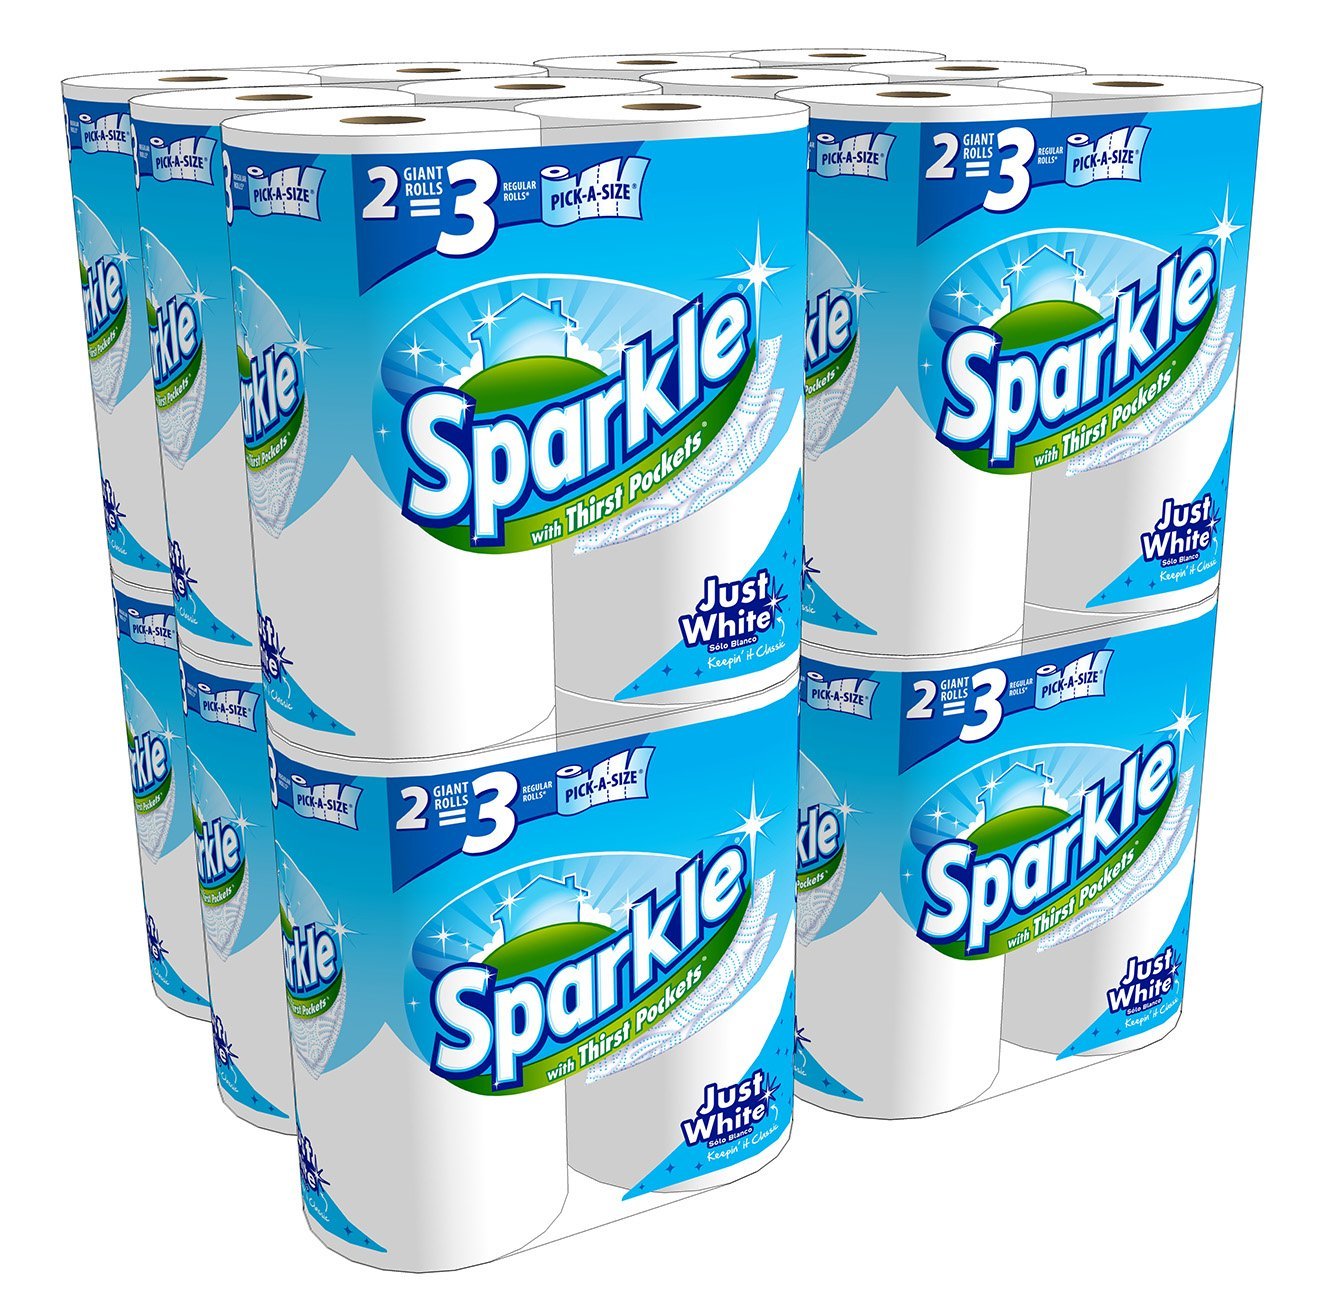 leading paper towel brands